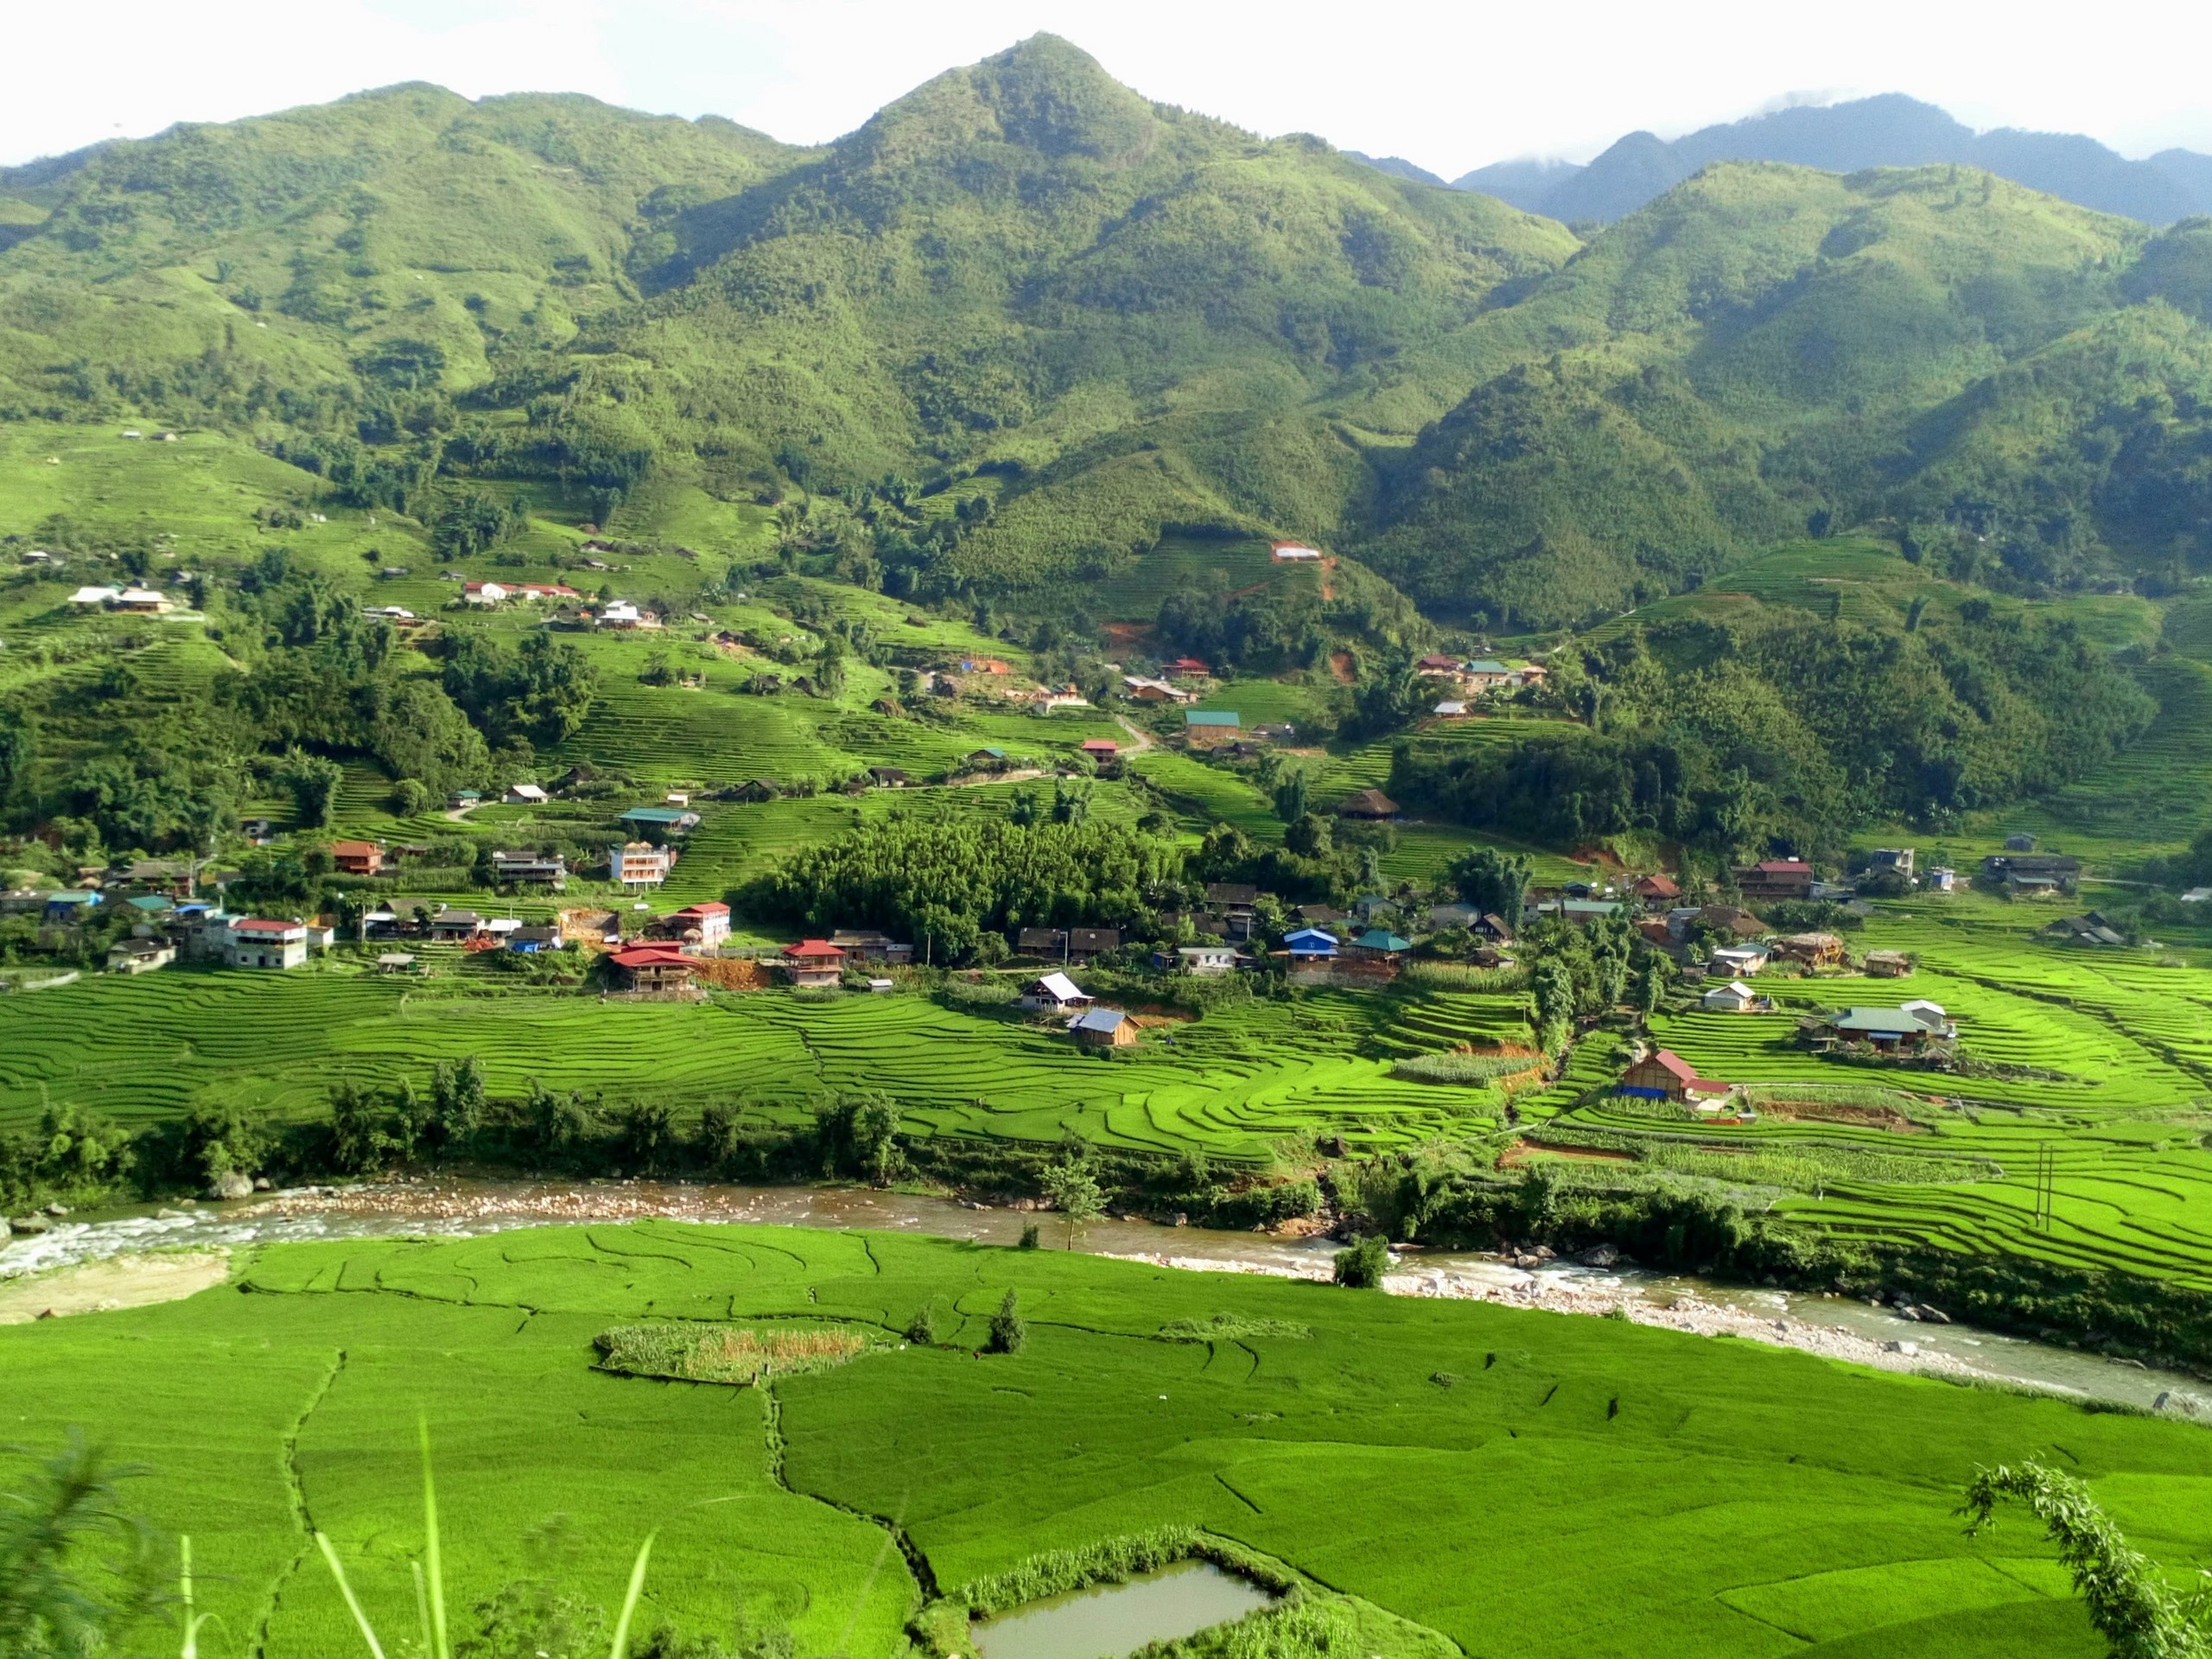 Lush greenery in Vietnam's countryside